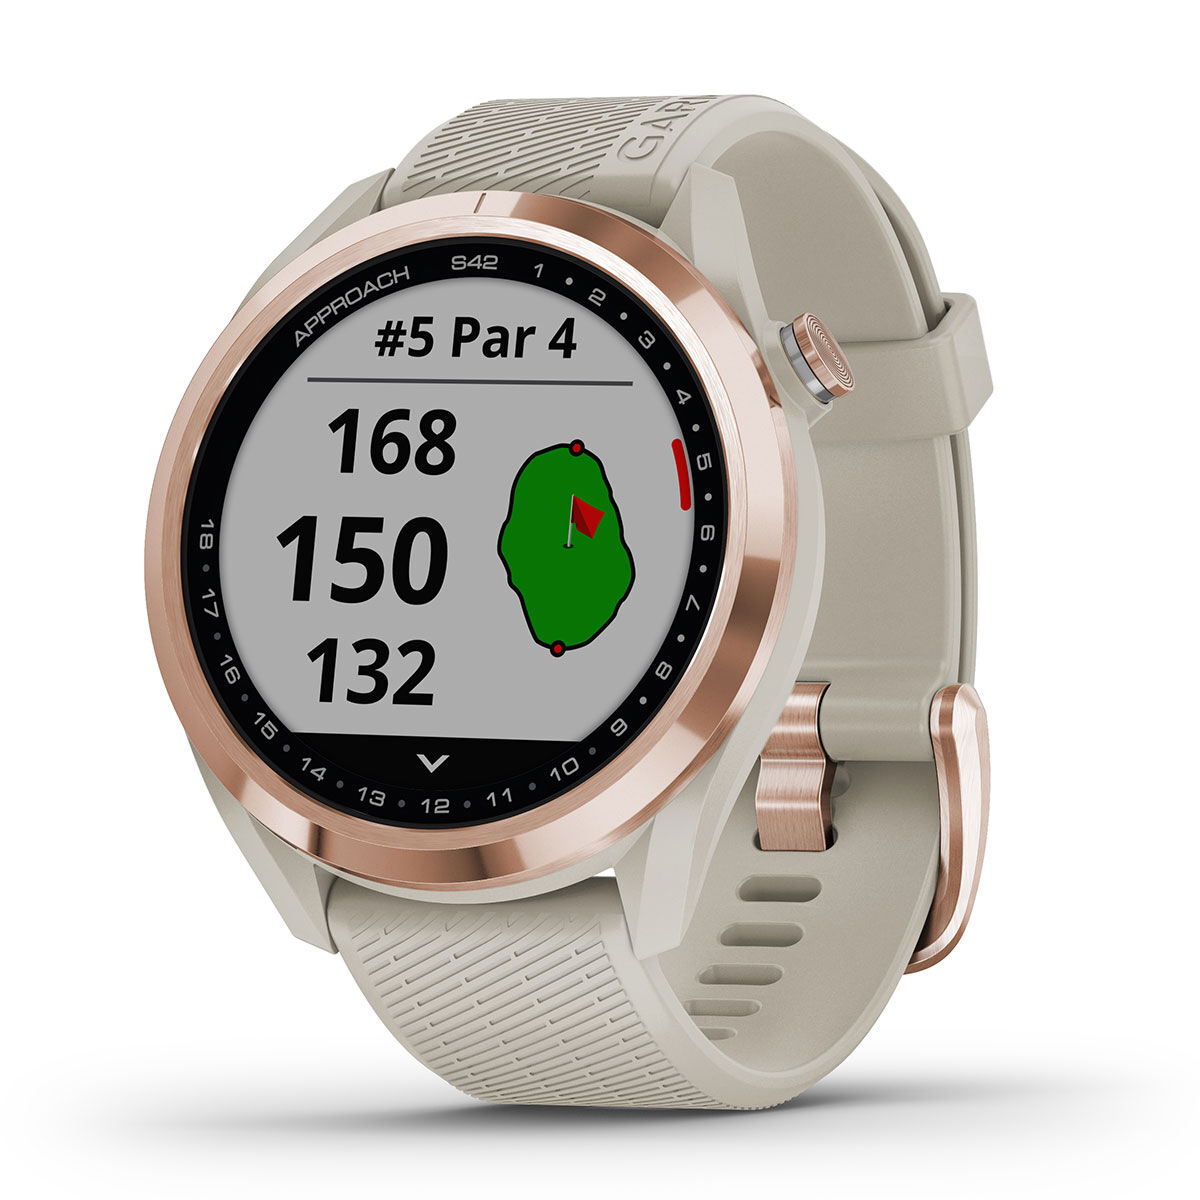 Garmin Rose Gold and Beige Approach S42 Golf GPS Watch| American Golf, One Size - Father's Day Gift von Garmin